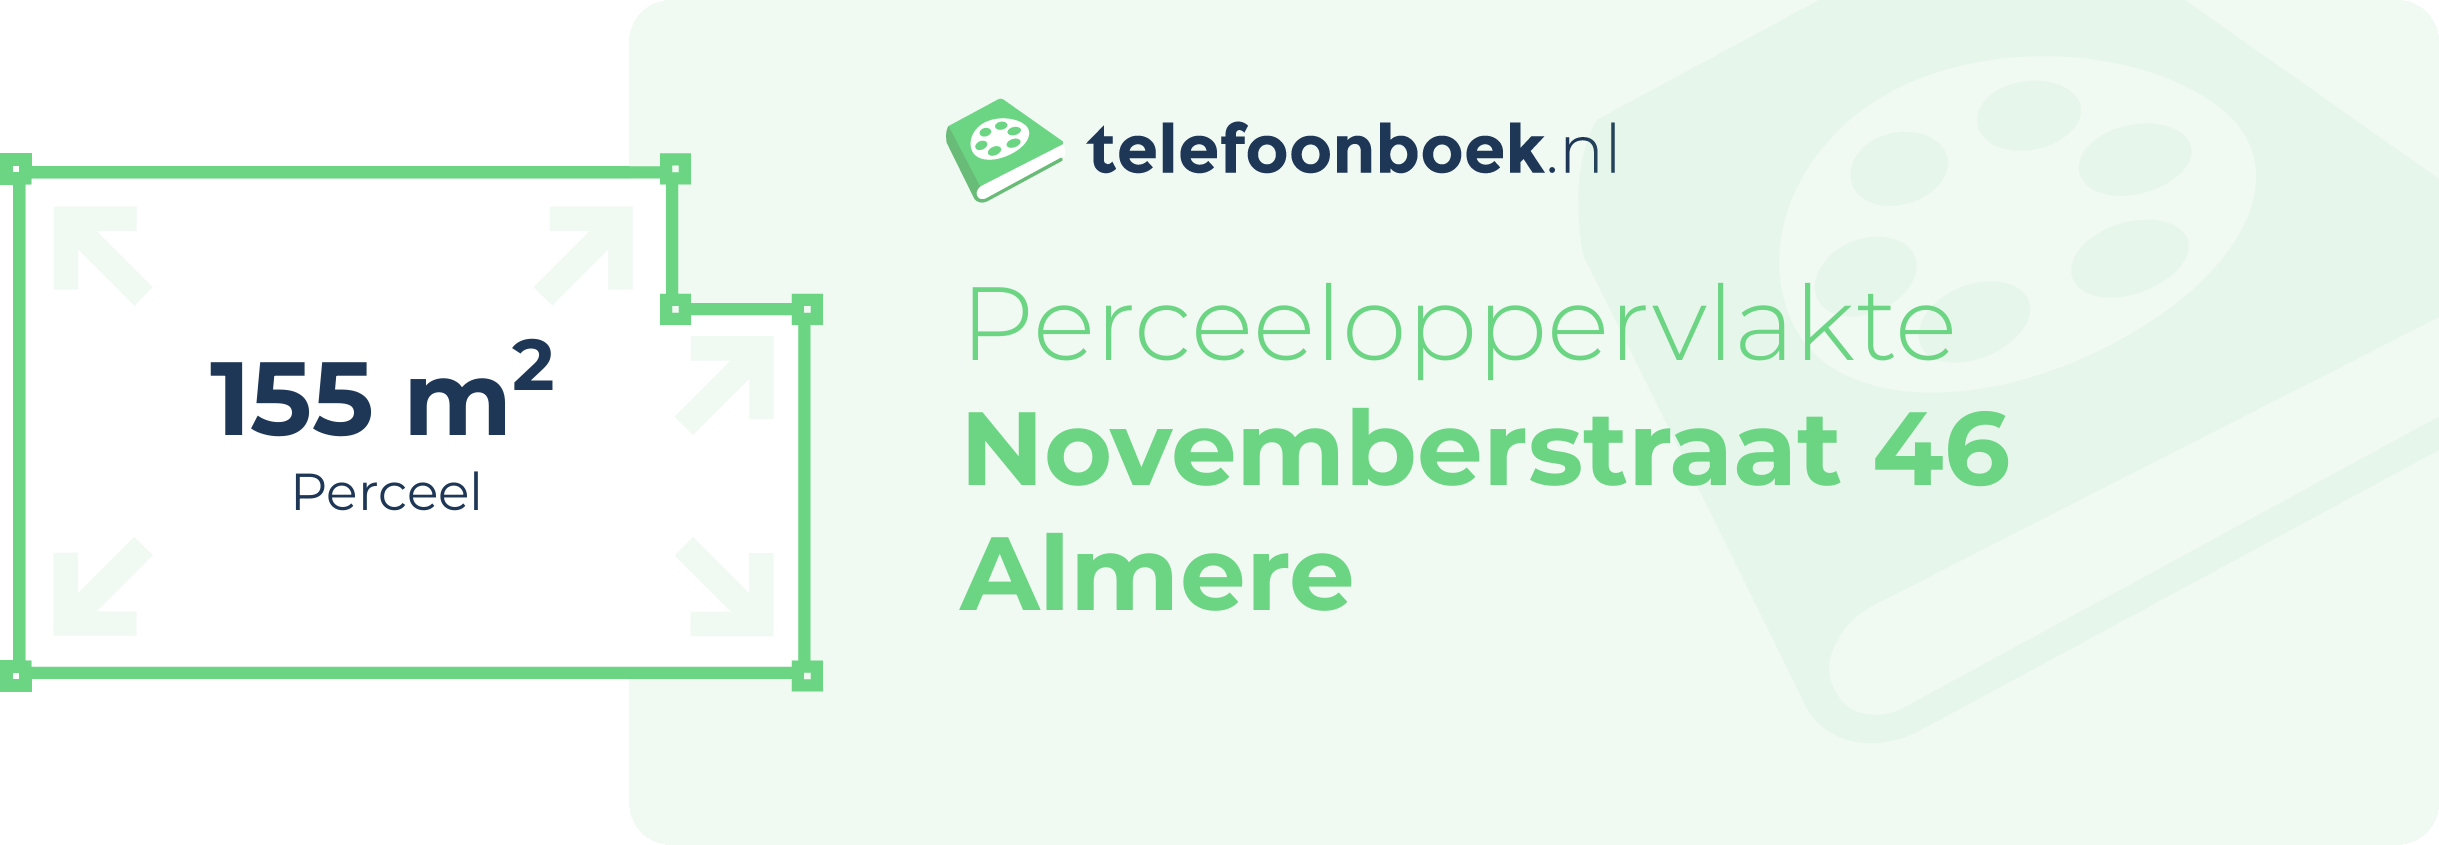 Perceeloppervlakte Novemberstraat 46 Almere